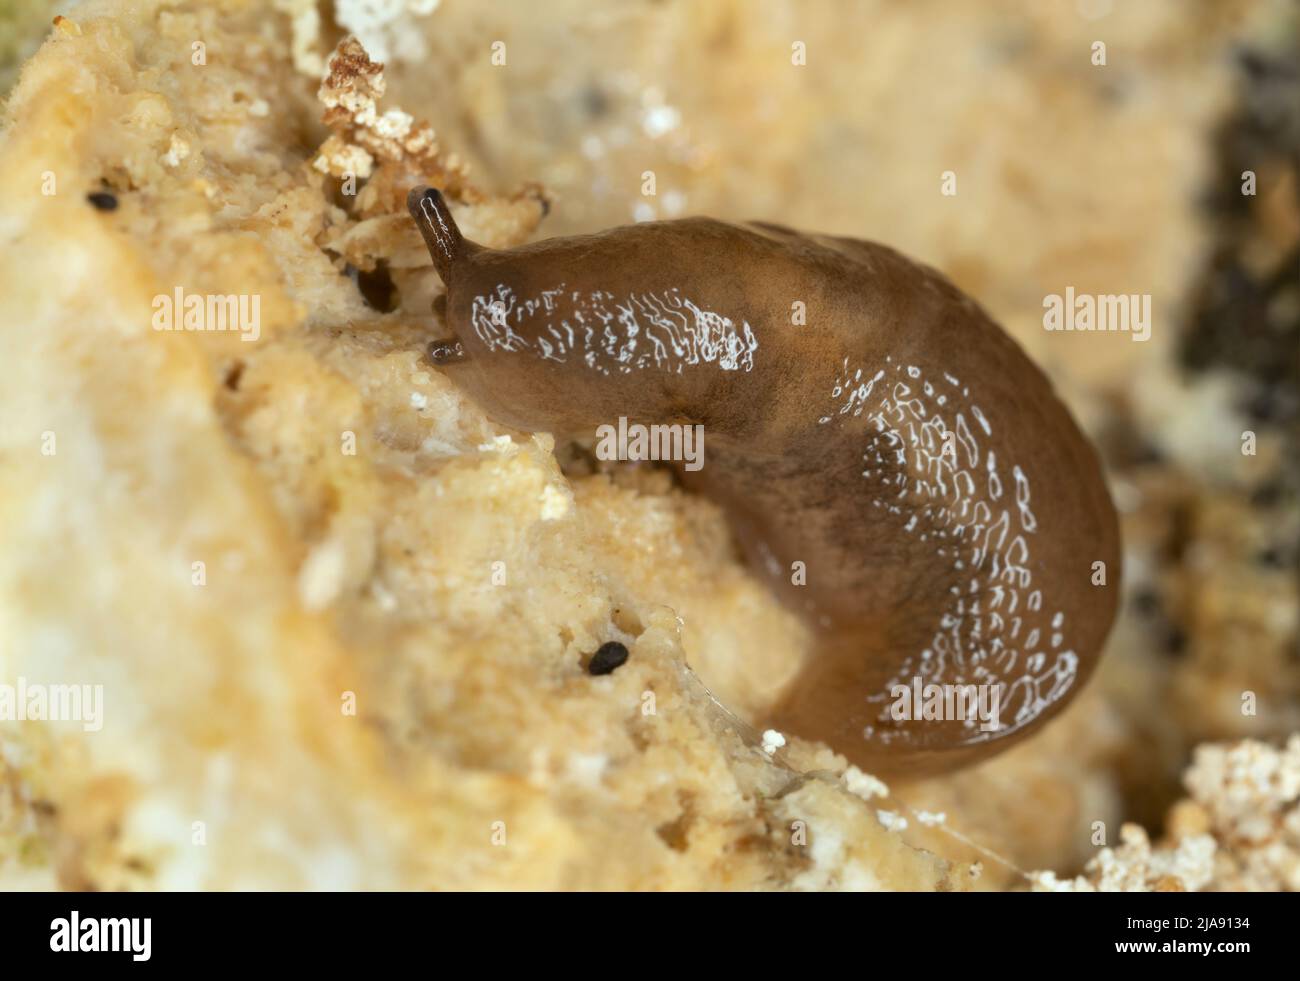 Lemon slug, Malacolimax tenellus feeding on fungus, macro photo Stock Photo